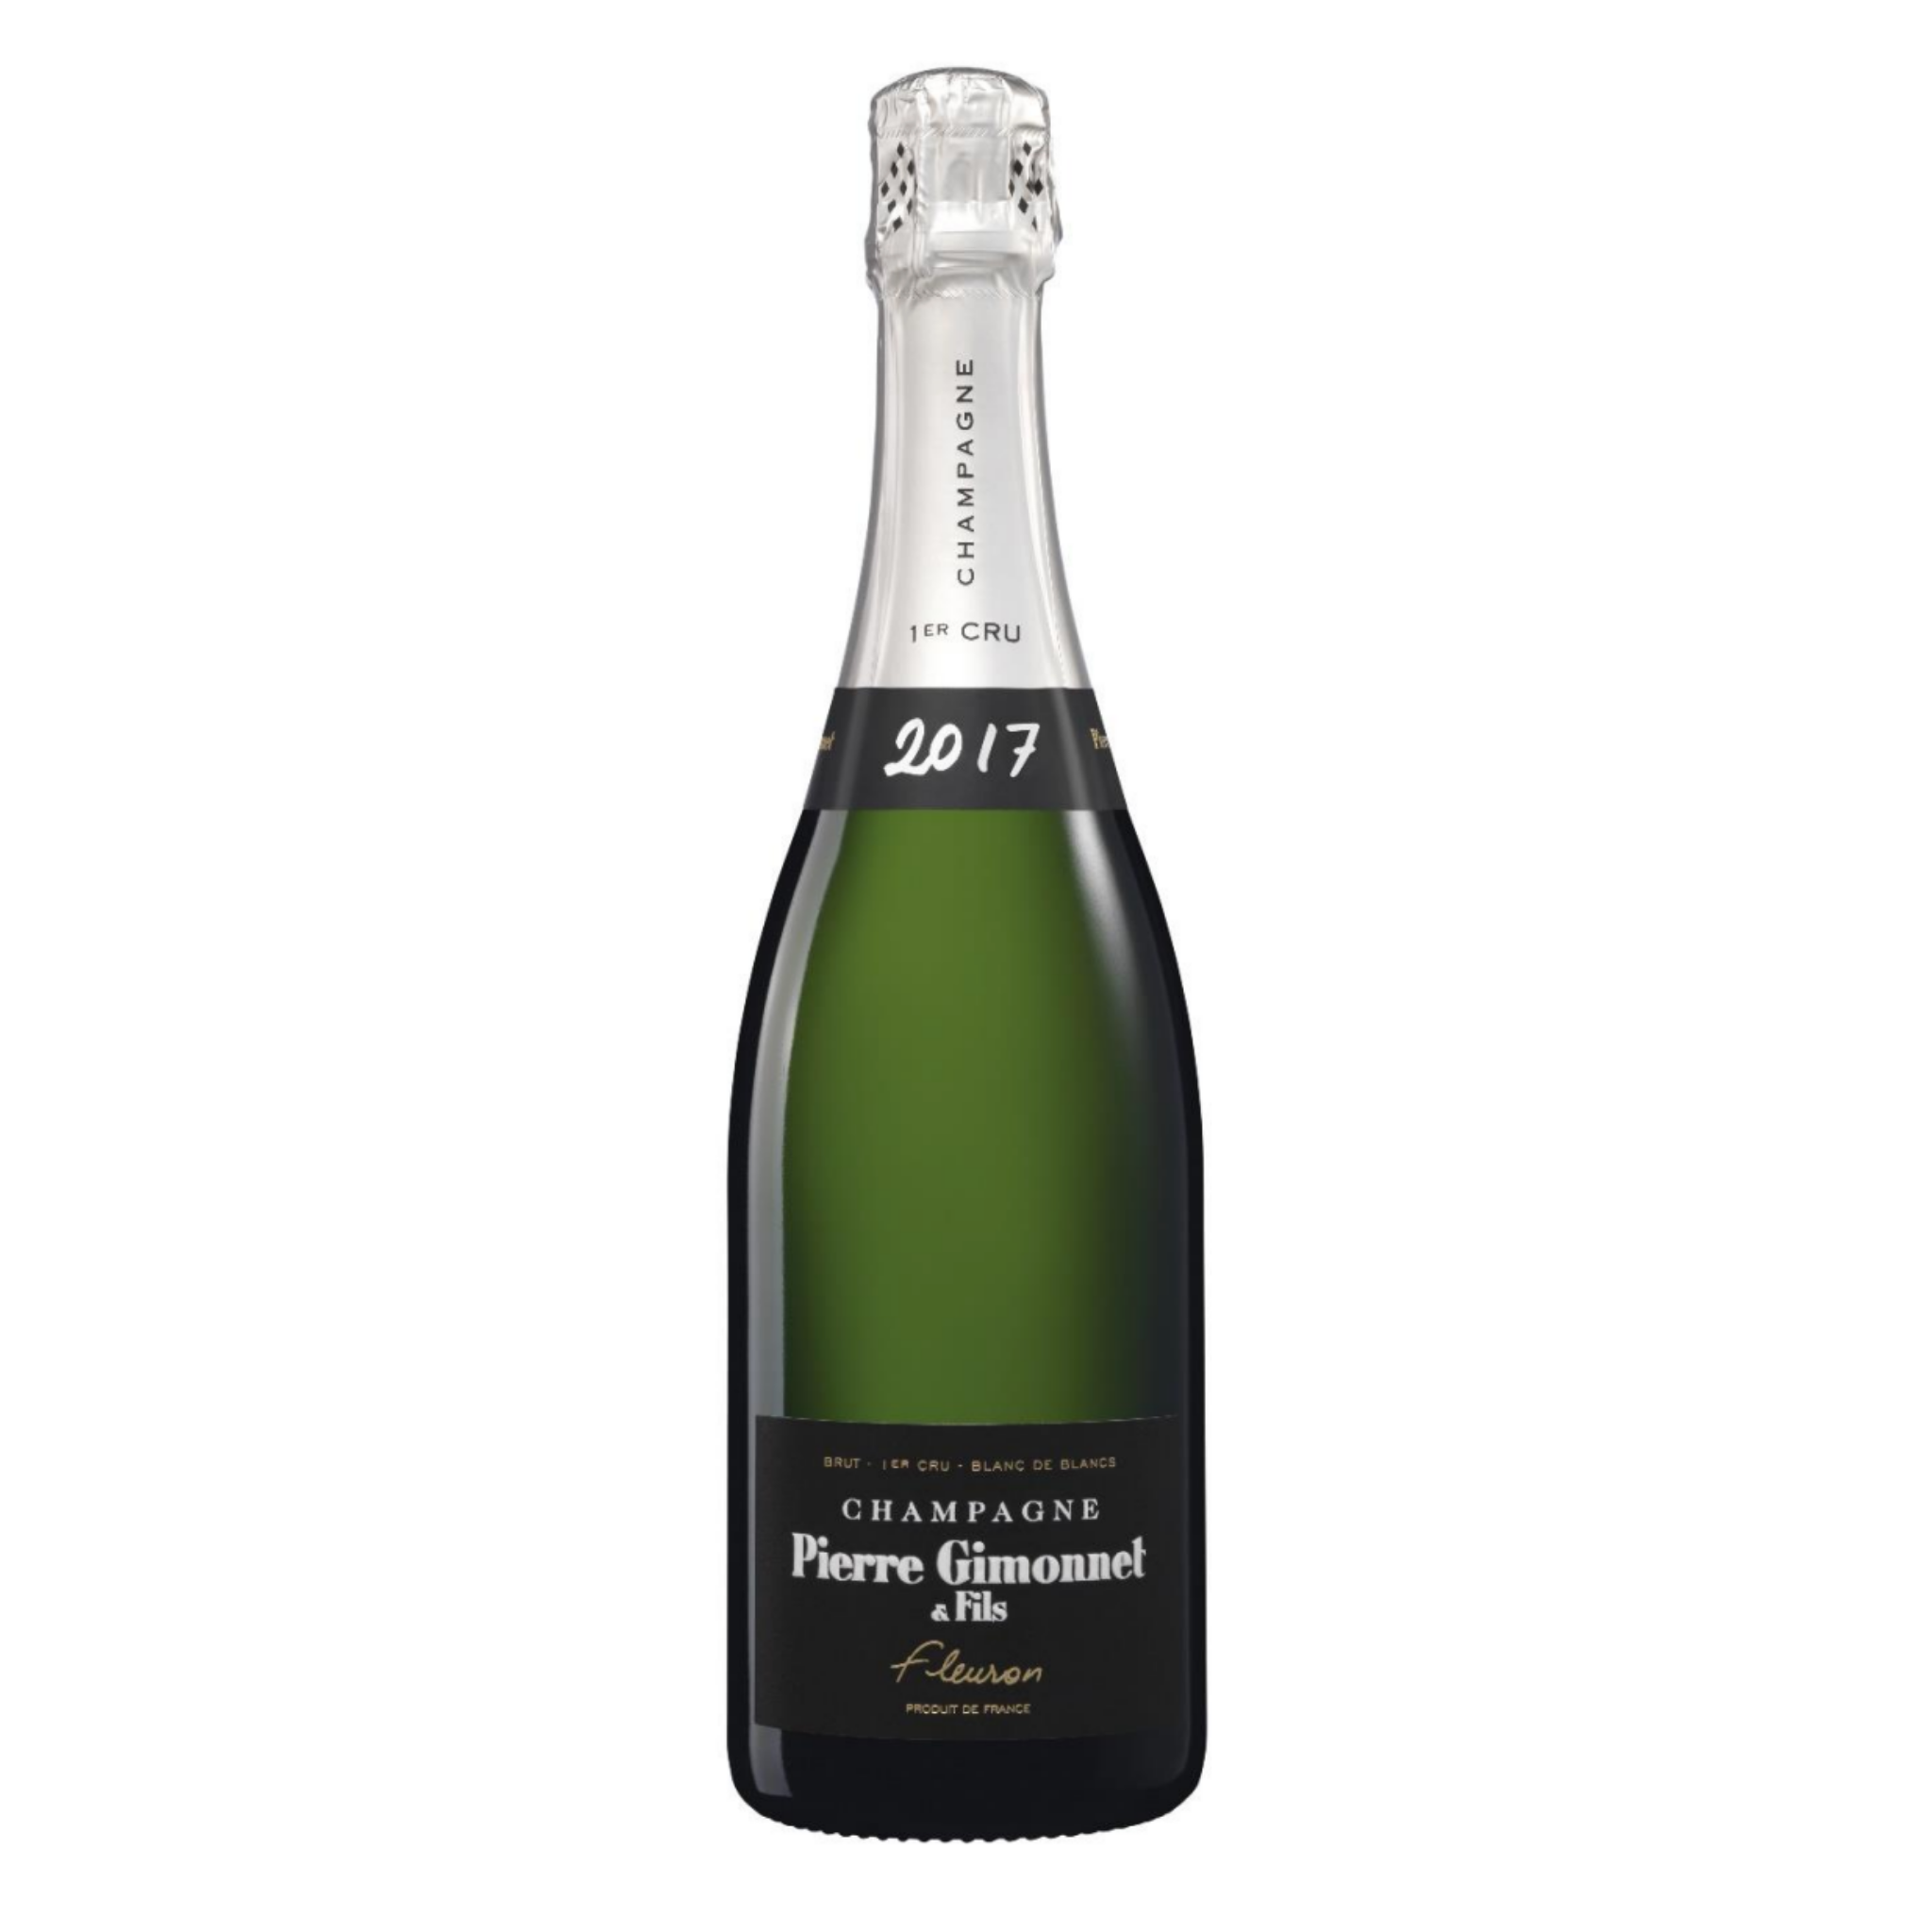 Champagne Pierre Gimonnet & Fils 1er Cru Brut Blanc de Blancs Fleuron